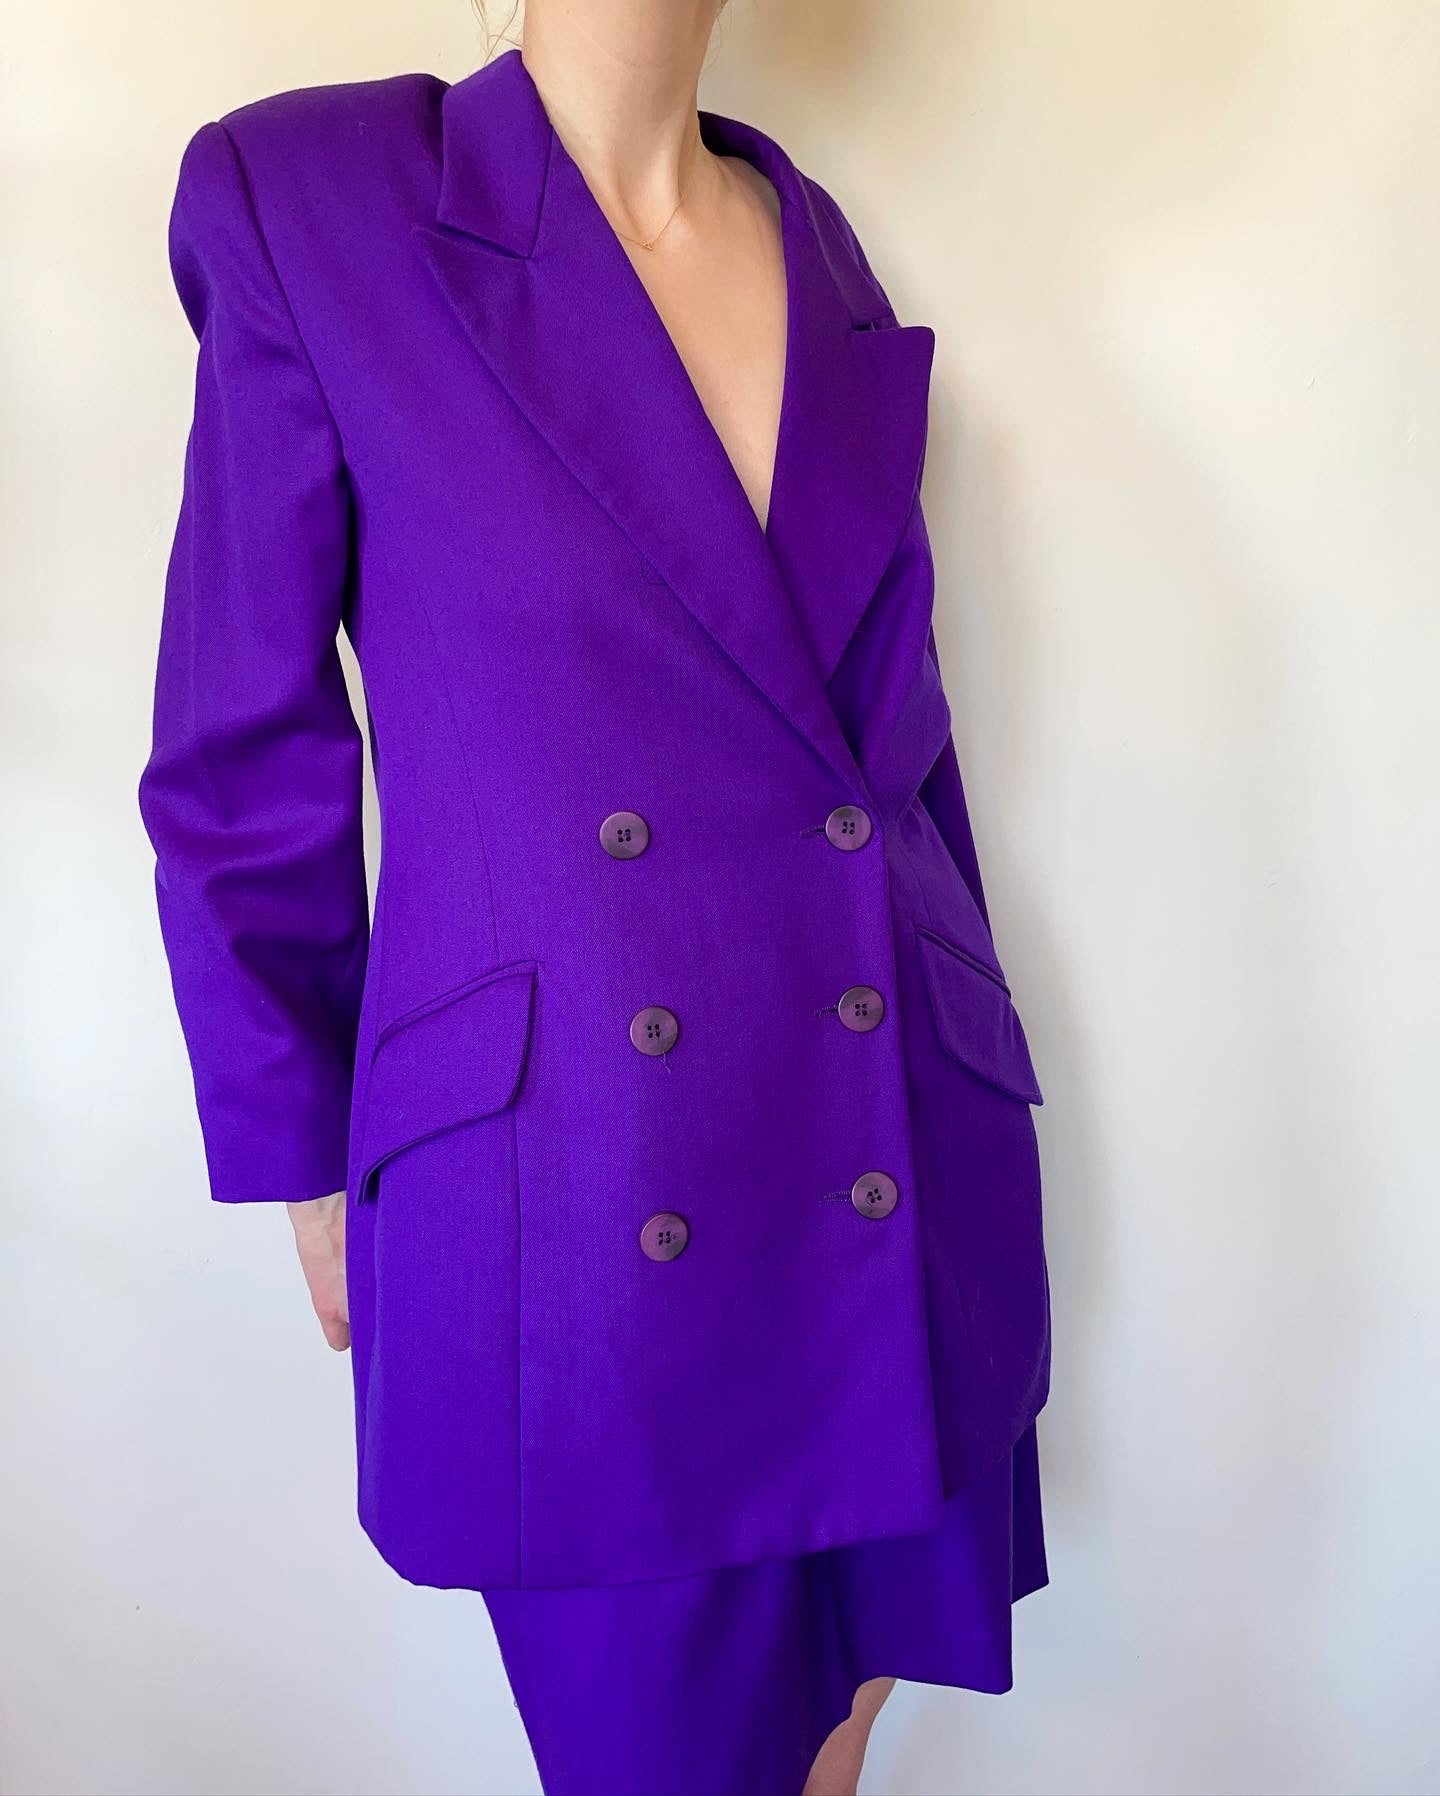 Neon Purple Suit